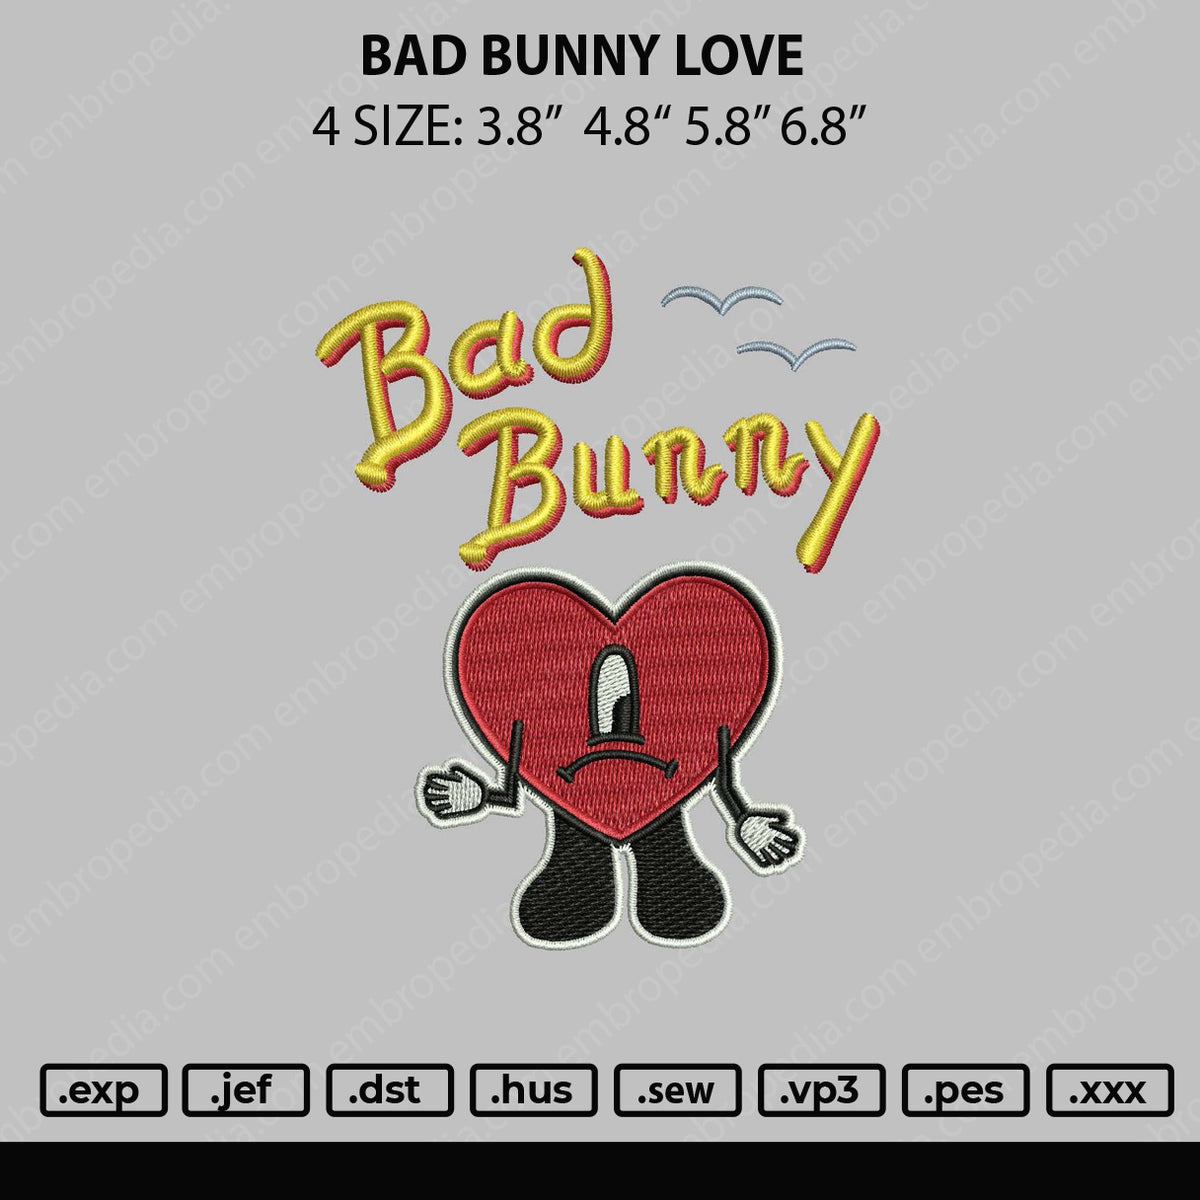 Nike Bad Bunny Heart Embroiery File 4 size – Embropedia